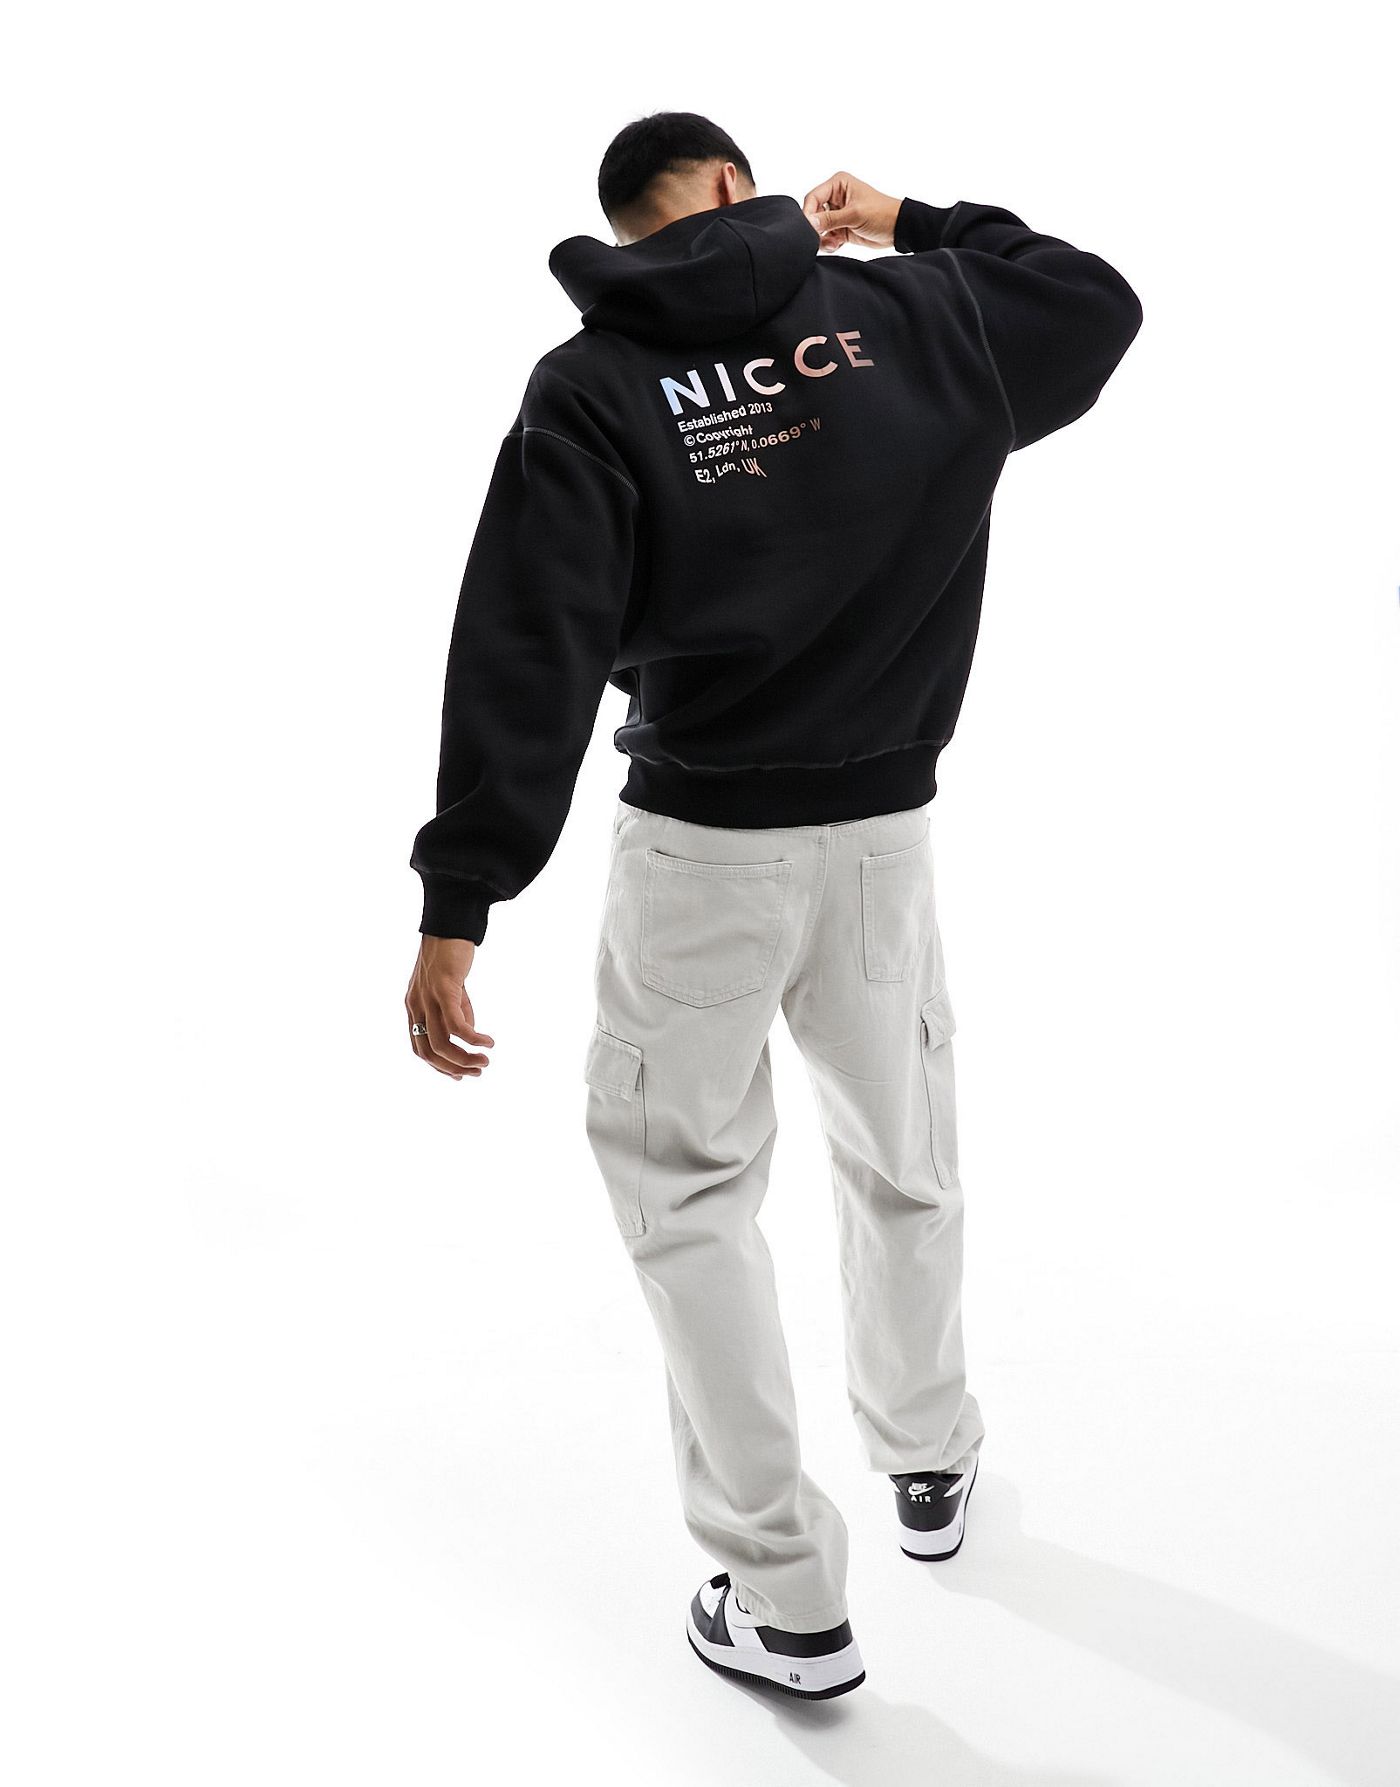 Nicce warped pullover hoodie in black with gradient logo print